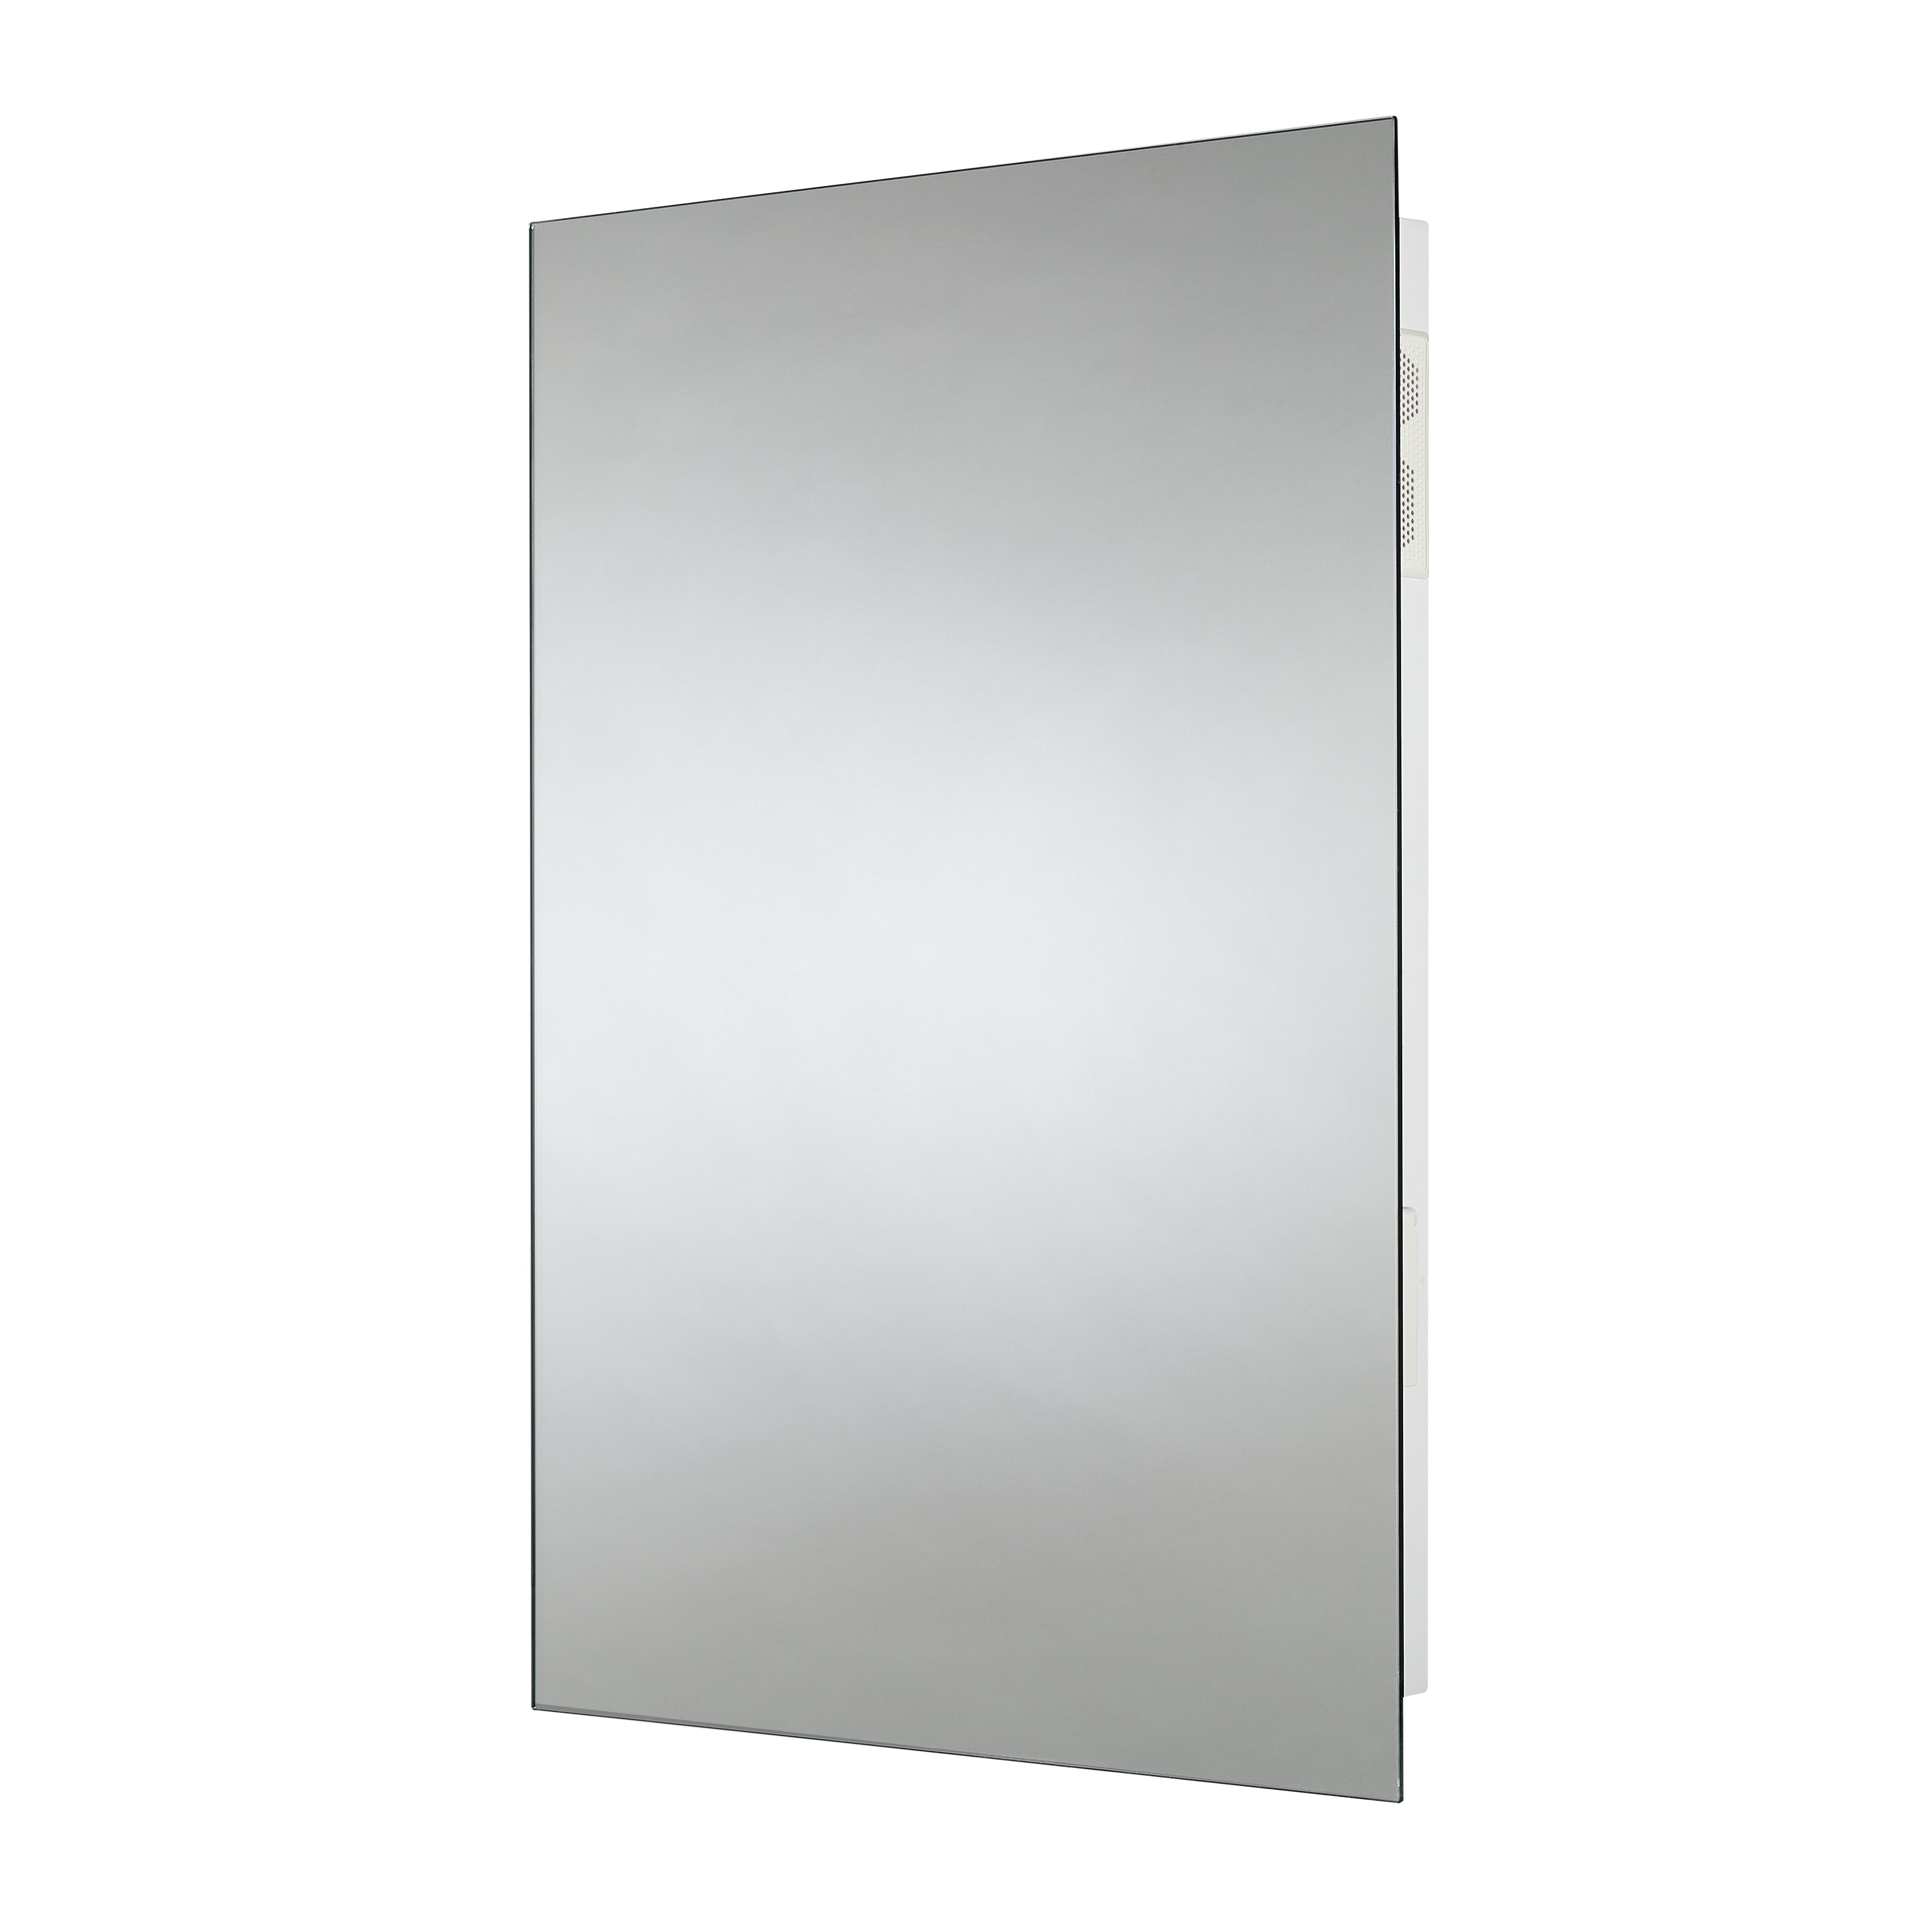 Sensio Avalon Rectangular Wall-mounted Bathroom Illuminated Mirror with Bluetooth speakers (H)70cm (W)50cm